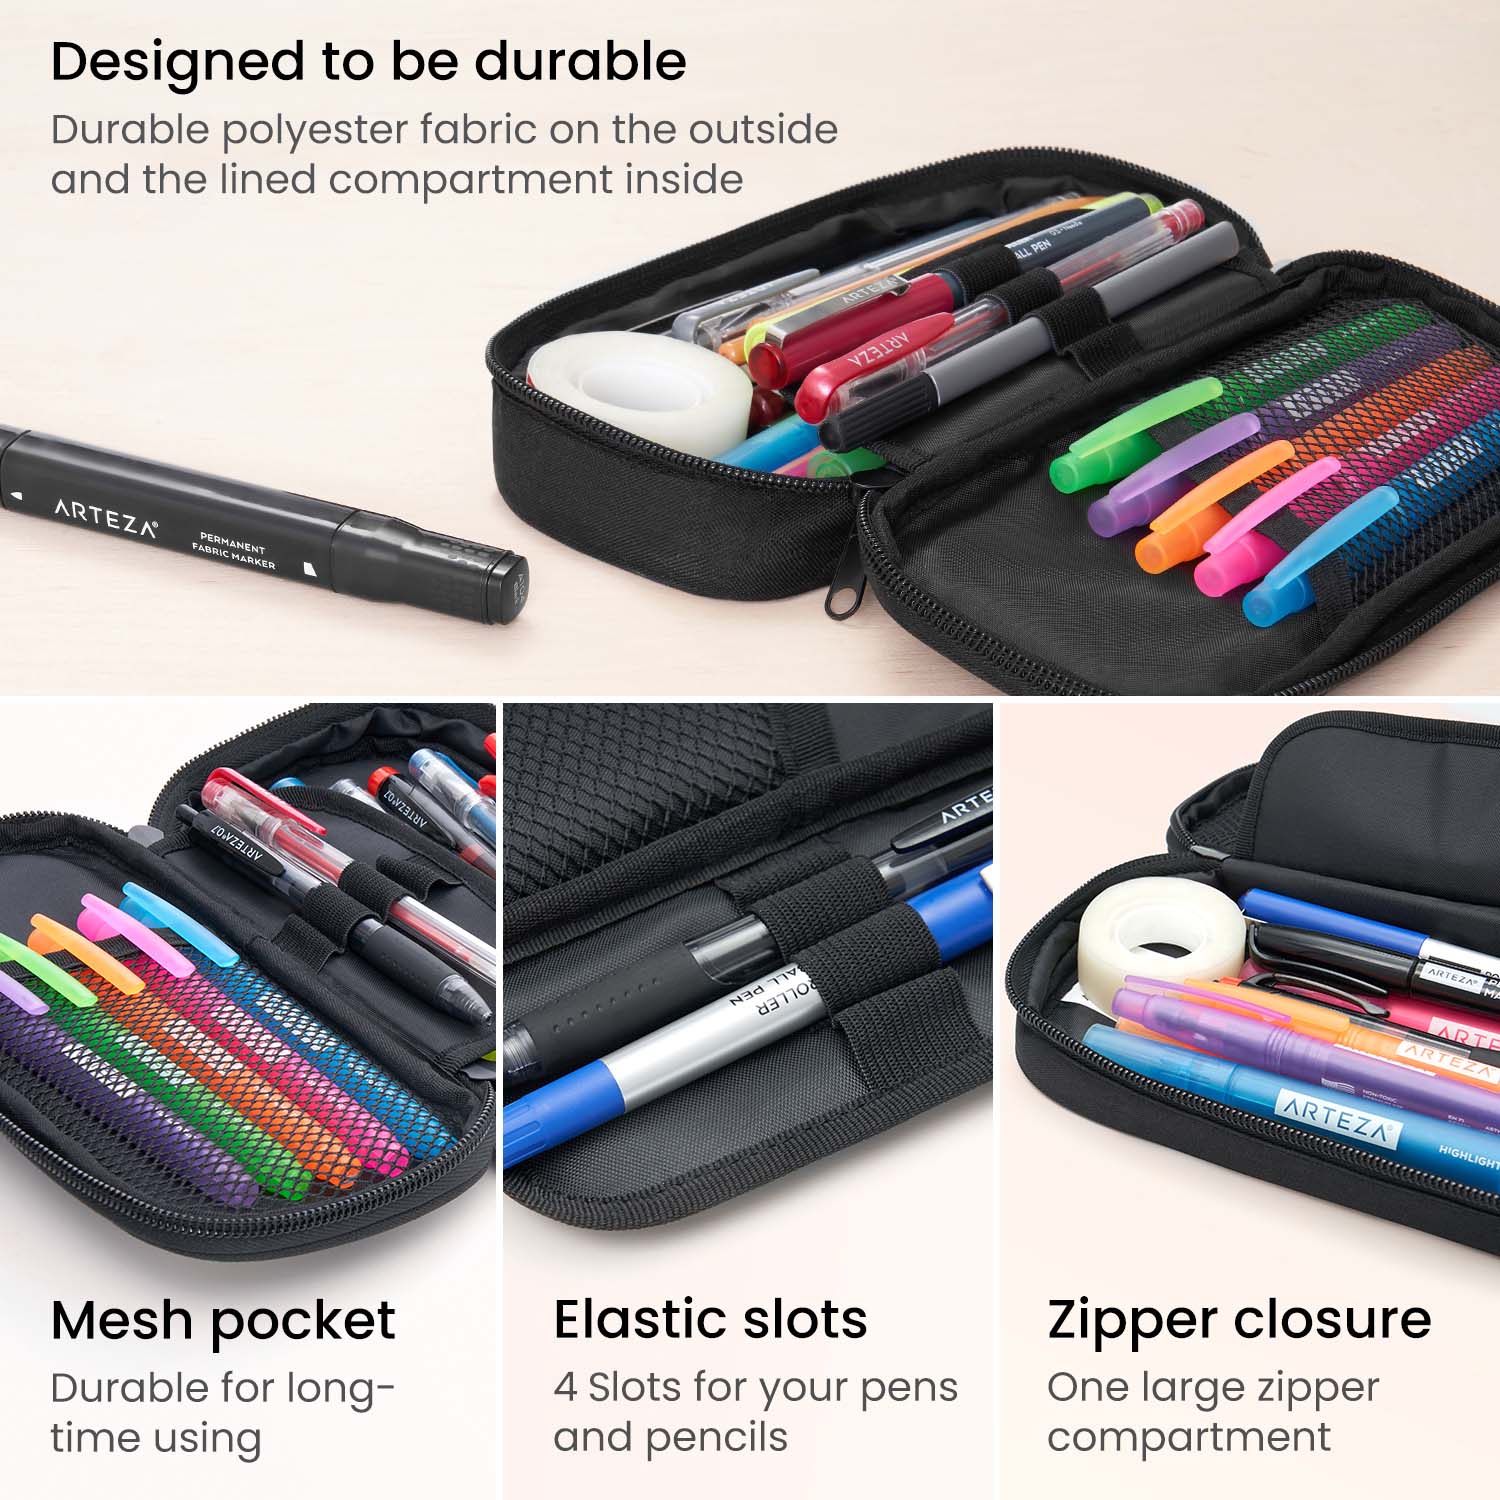 Arteza Professional Watercolor Pencils and Artist Pencil Case